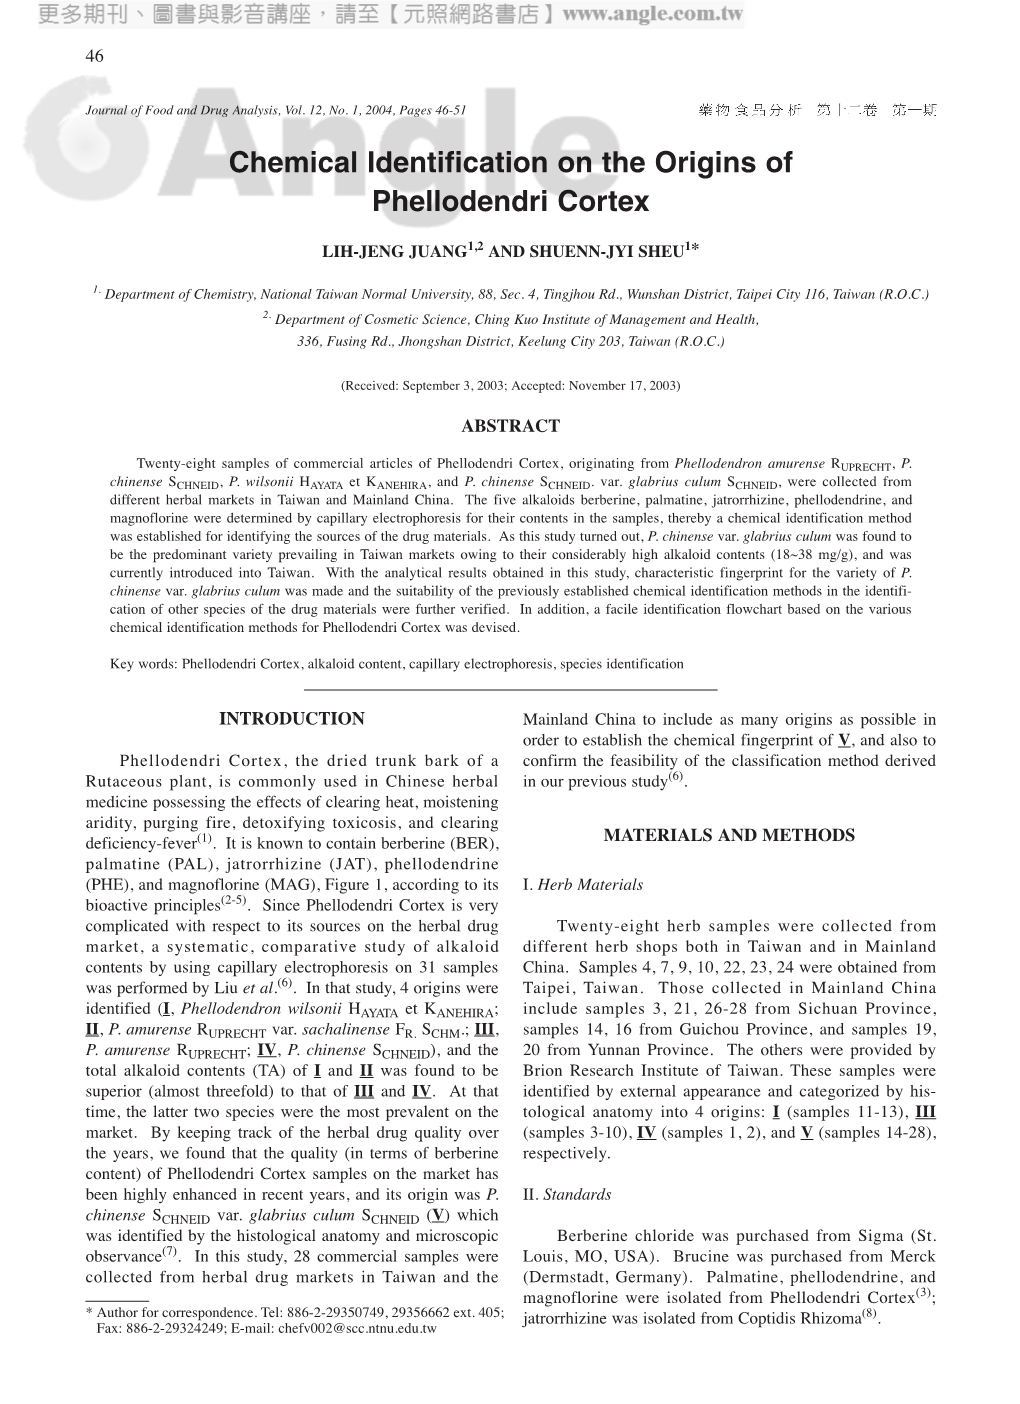 Chemical Identification on the Origins of Phellodendri Cortex